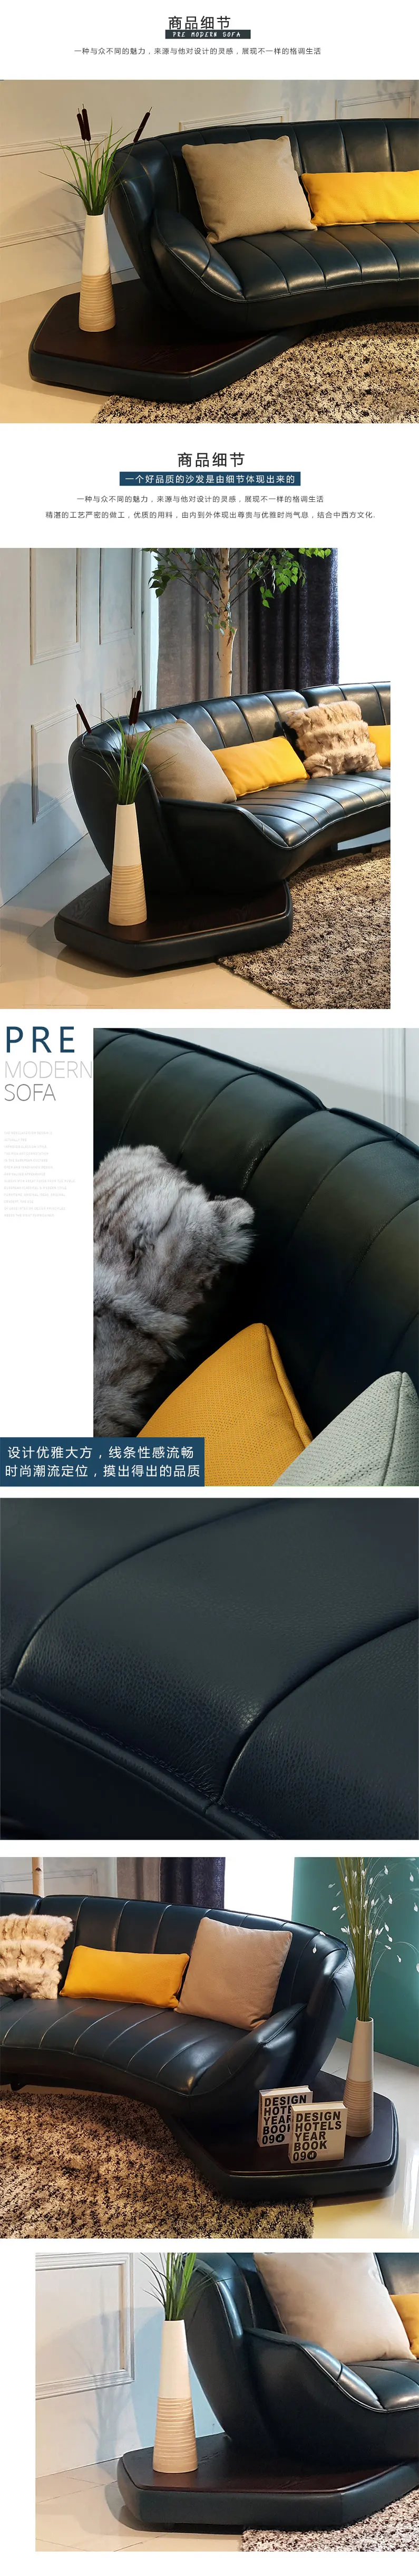 Latest Living Room Modern Home Furniture China Black Sofa Set, Curved Sofa